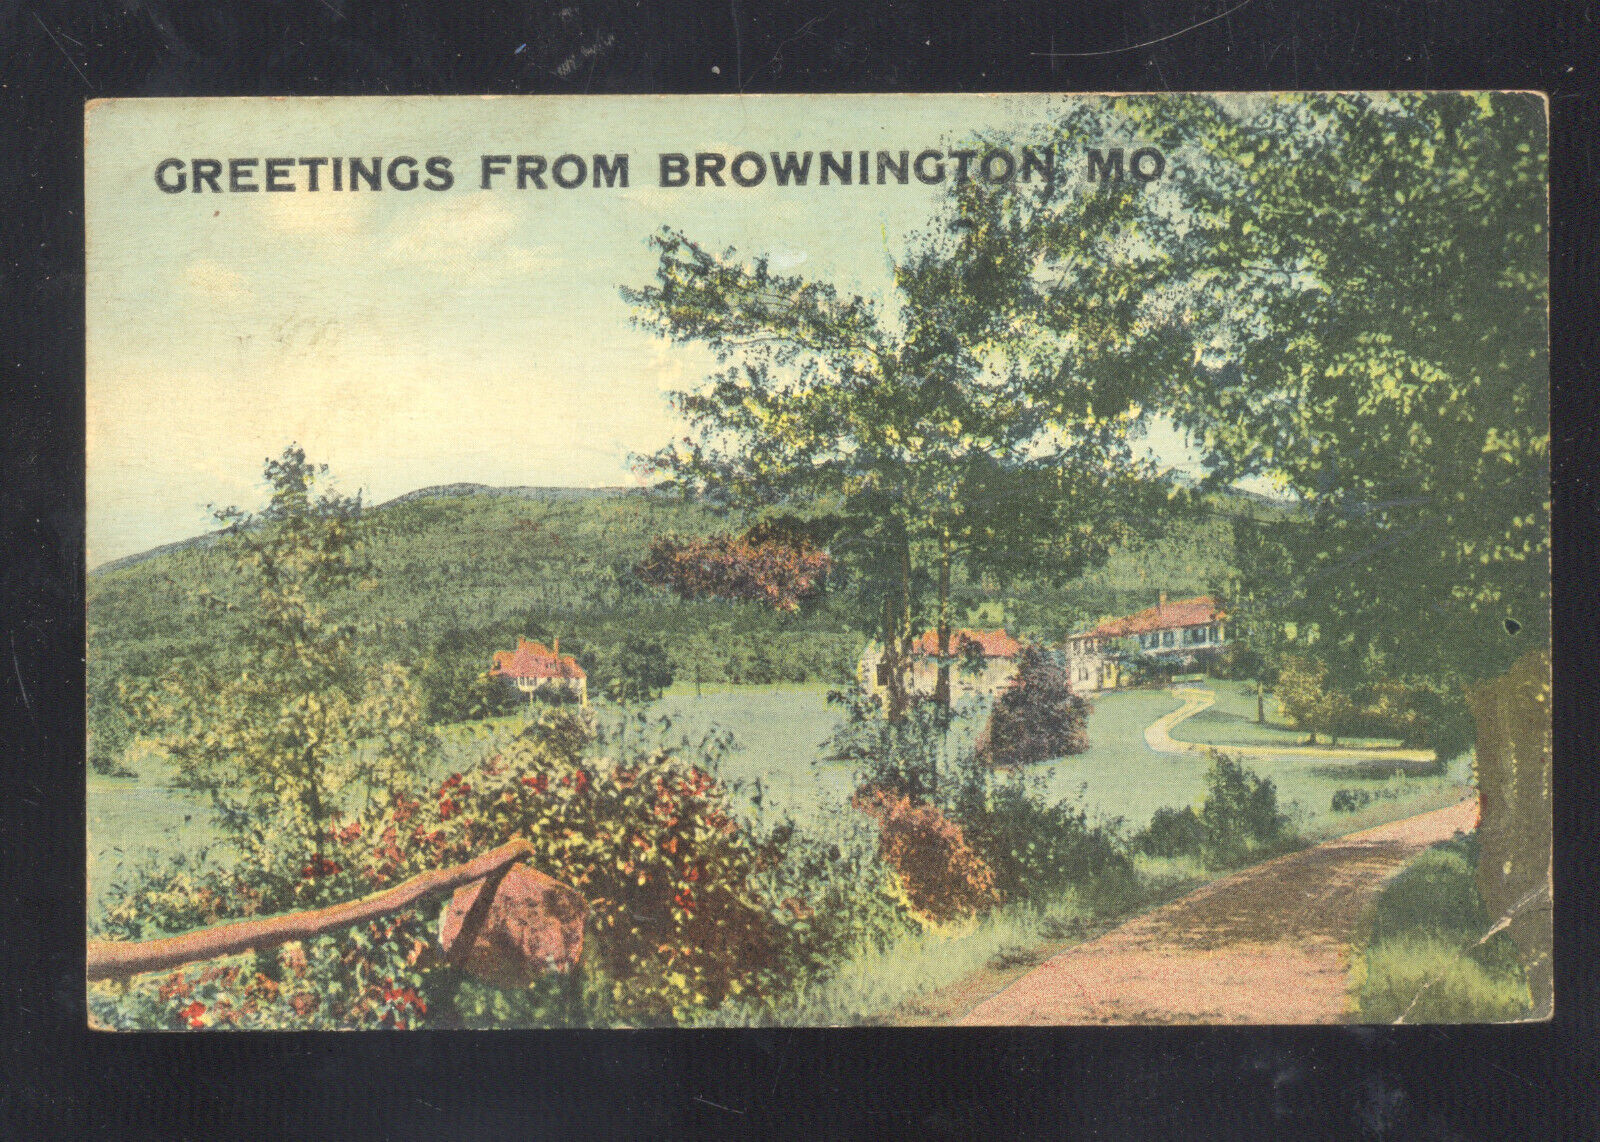 GREETINGS FROM BROWNINGTON MISSOURI MO. VINTAGE POSTCARD 1910